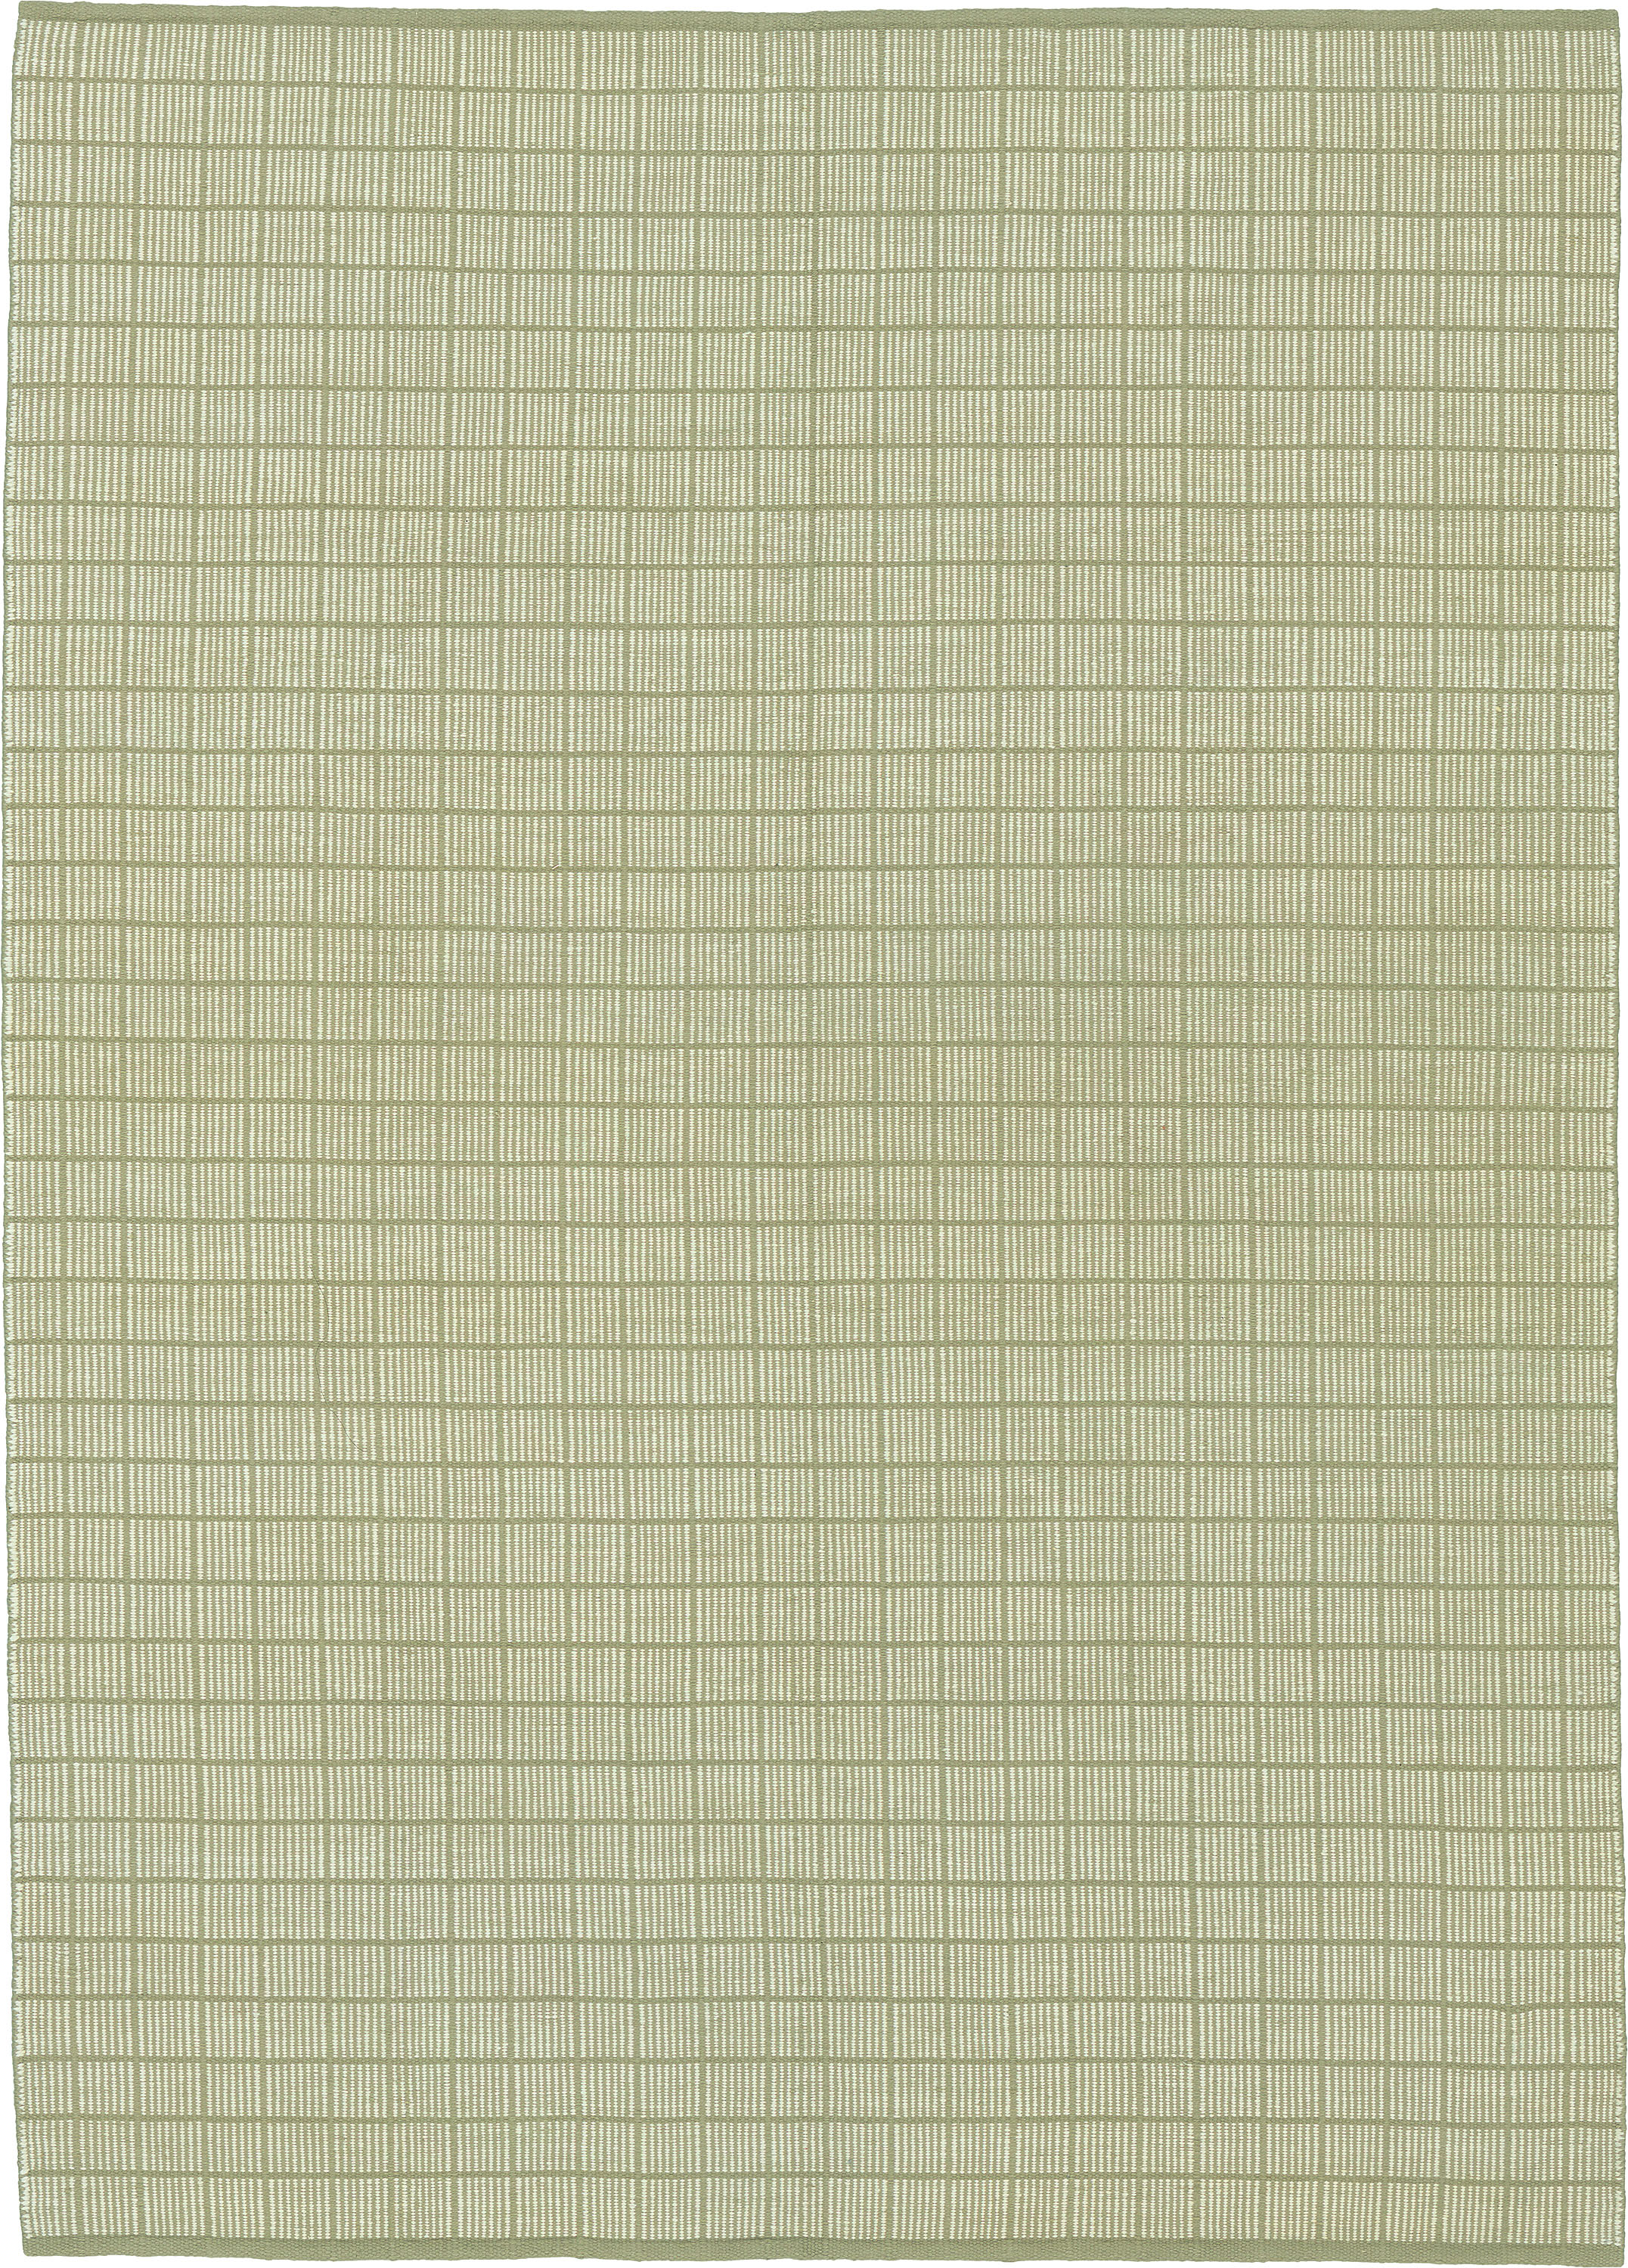 16720 Libri Design | Custom Swedish Inspired Flat Weave Carpet | FJ Hakimian | Carpet Gallery in NY